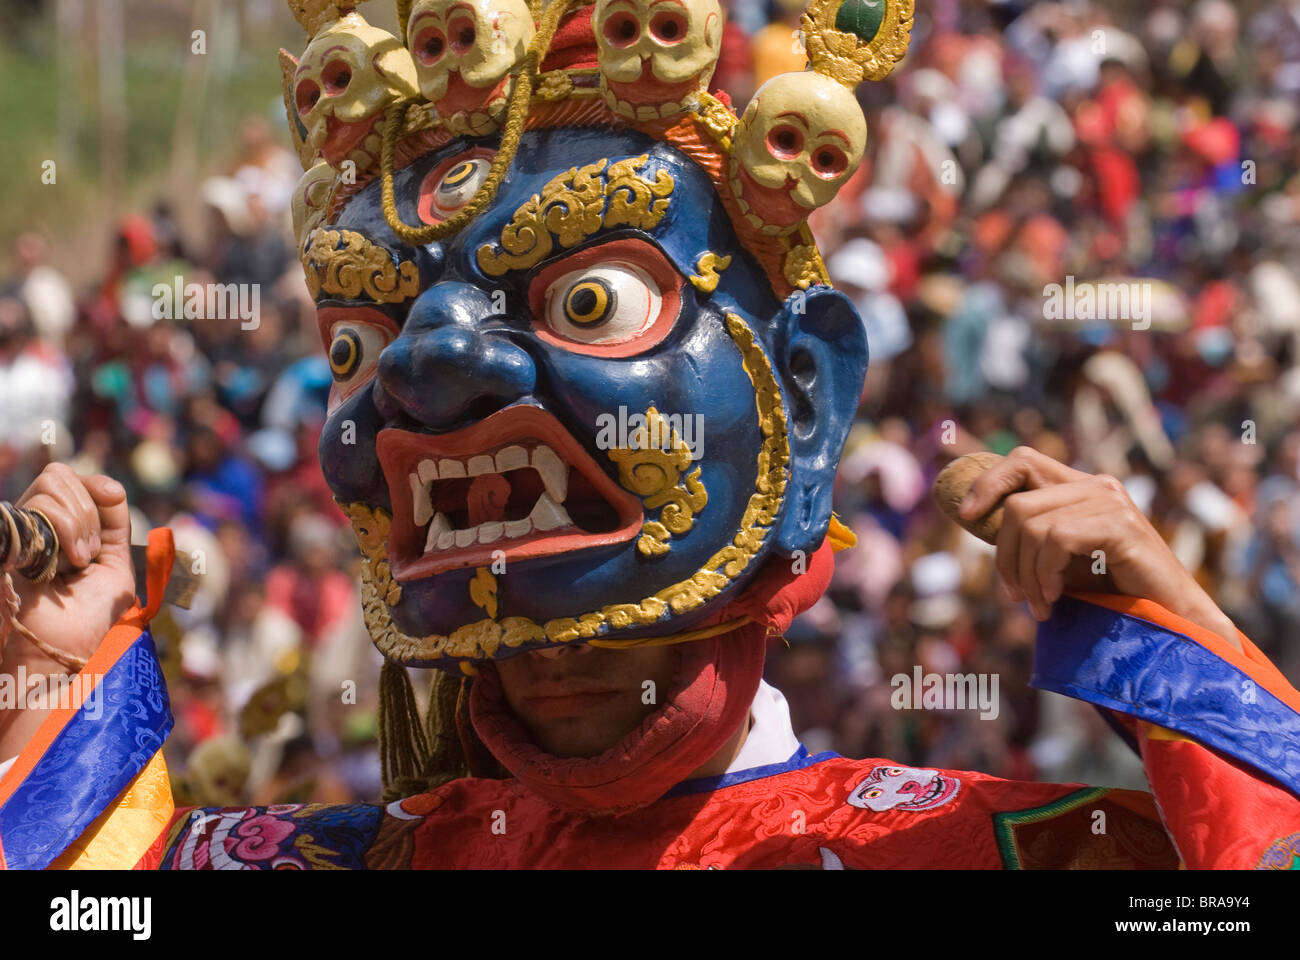 Masked dancer at religious festival with many visitors, Paro Tsechu, Paro, Bhutan, Asia Stock Photo